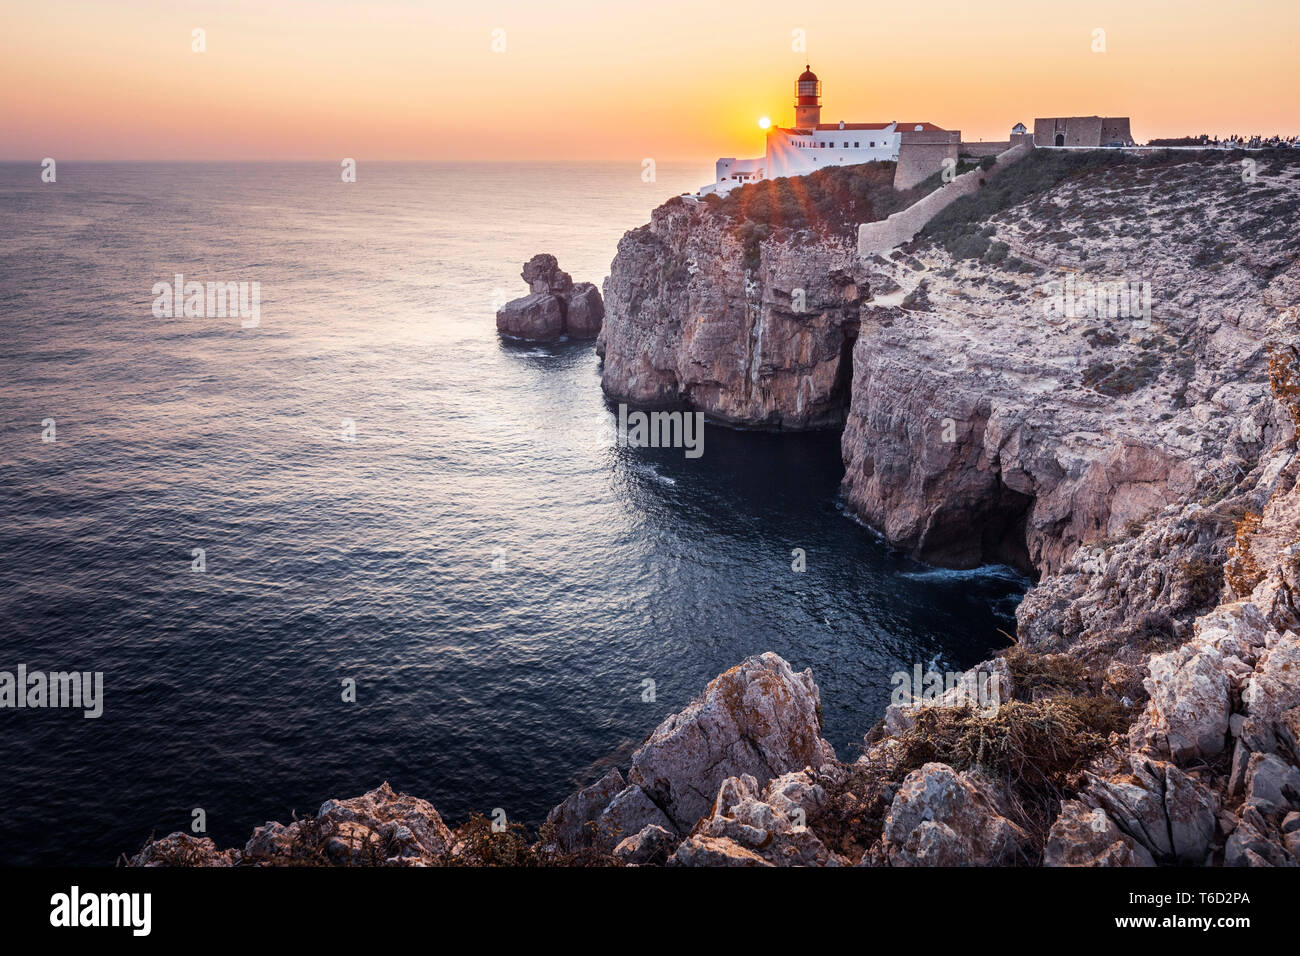 Portugal, Algarve, Vicentine Coast, Sagres, Cape St. Vincent (Cabo de Sao Vicente) at sunset Stock Photo